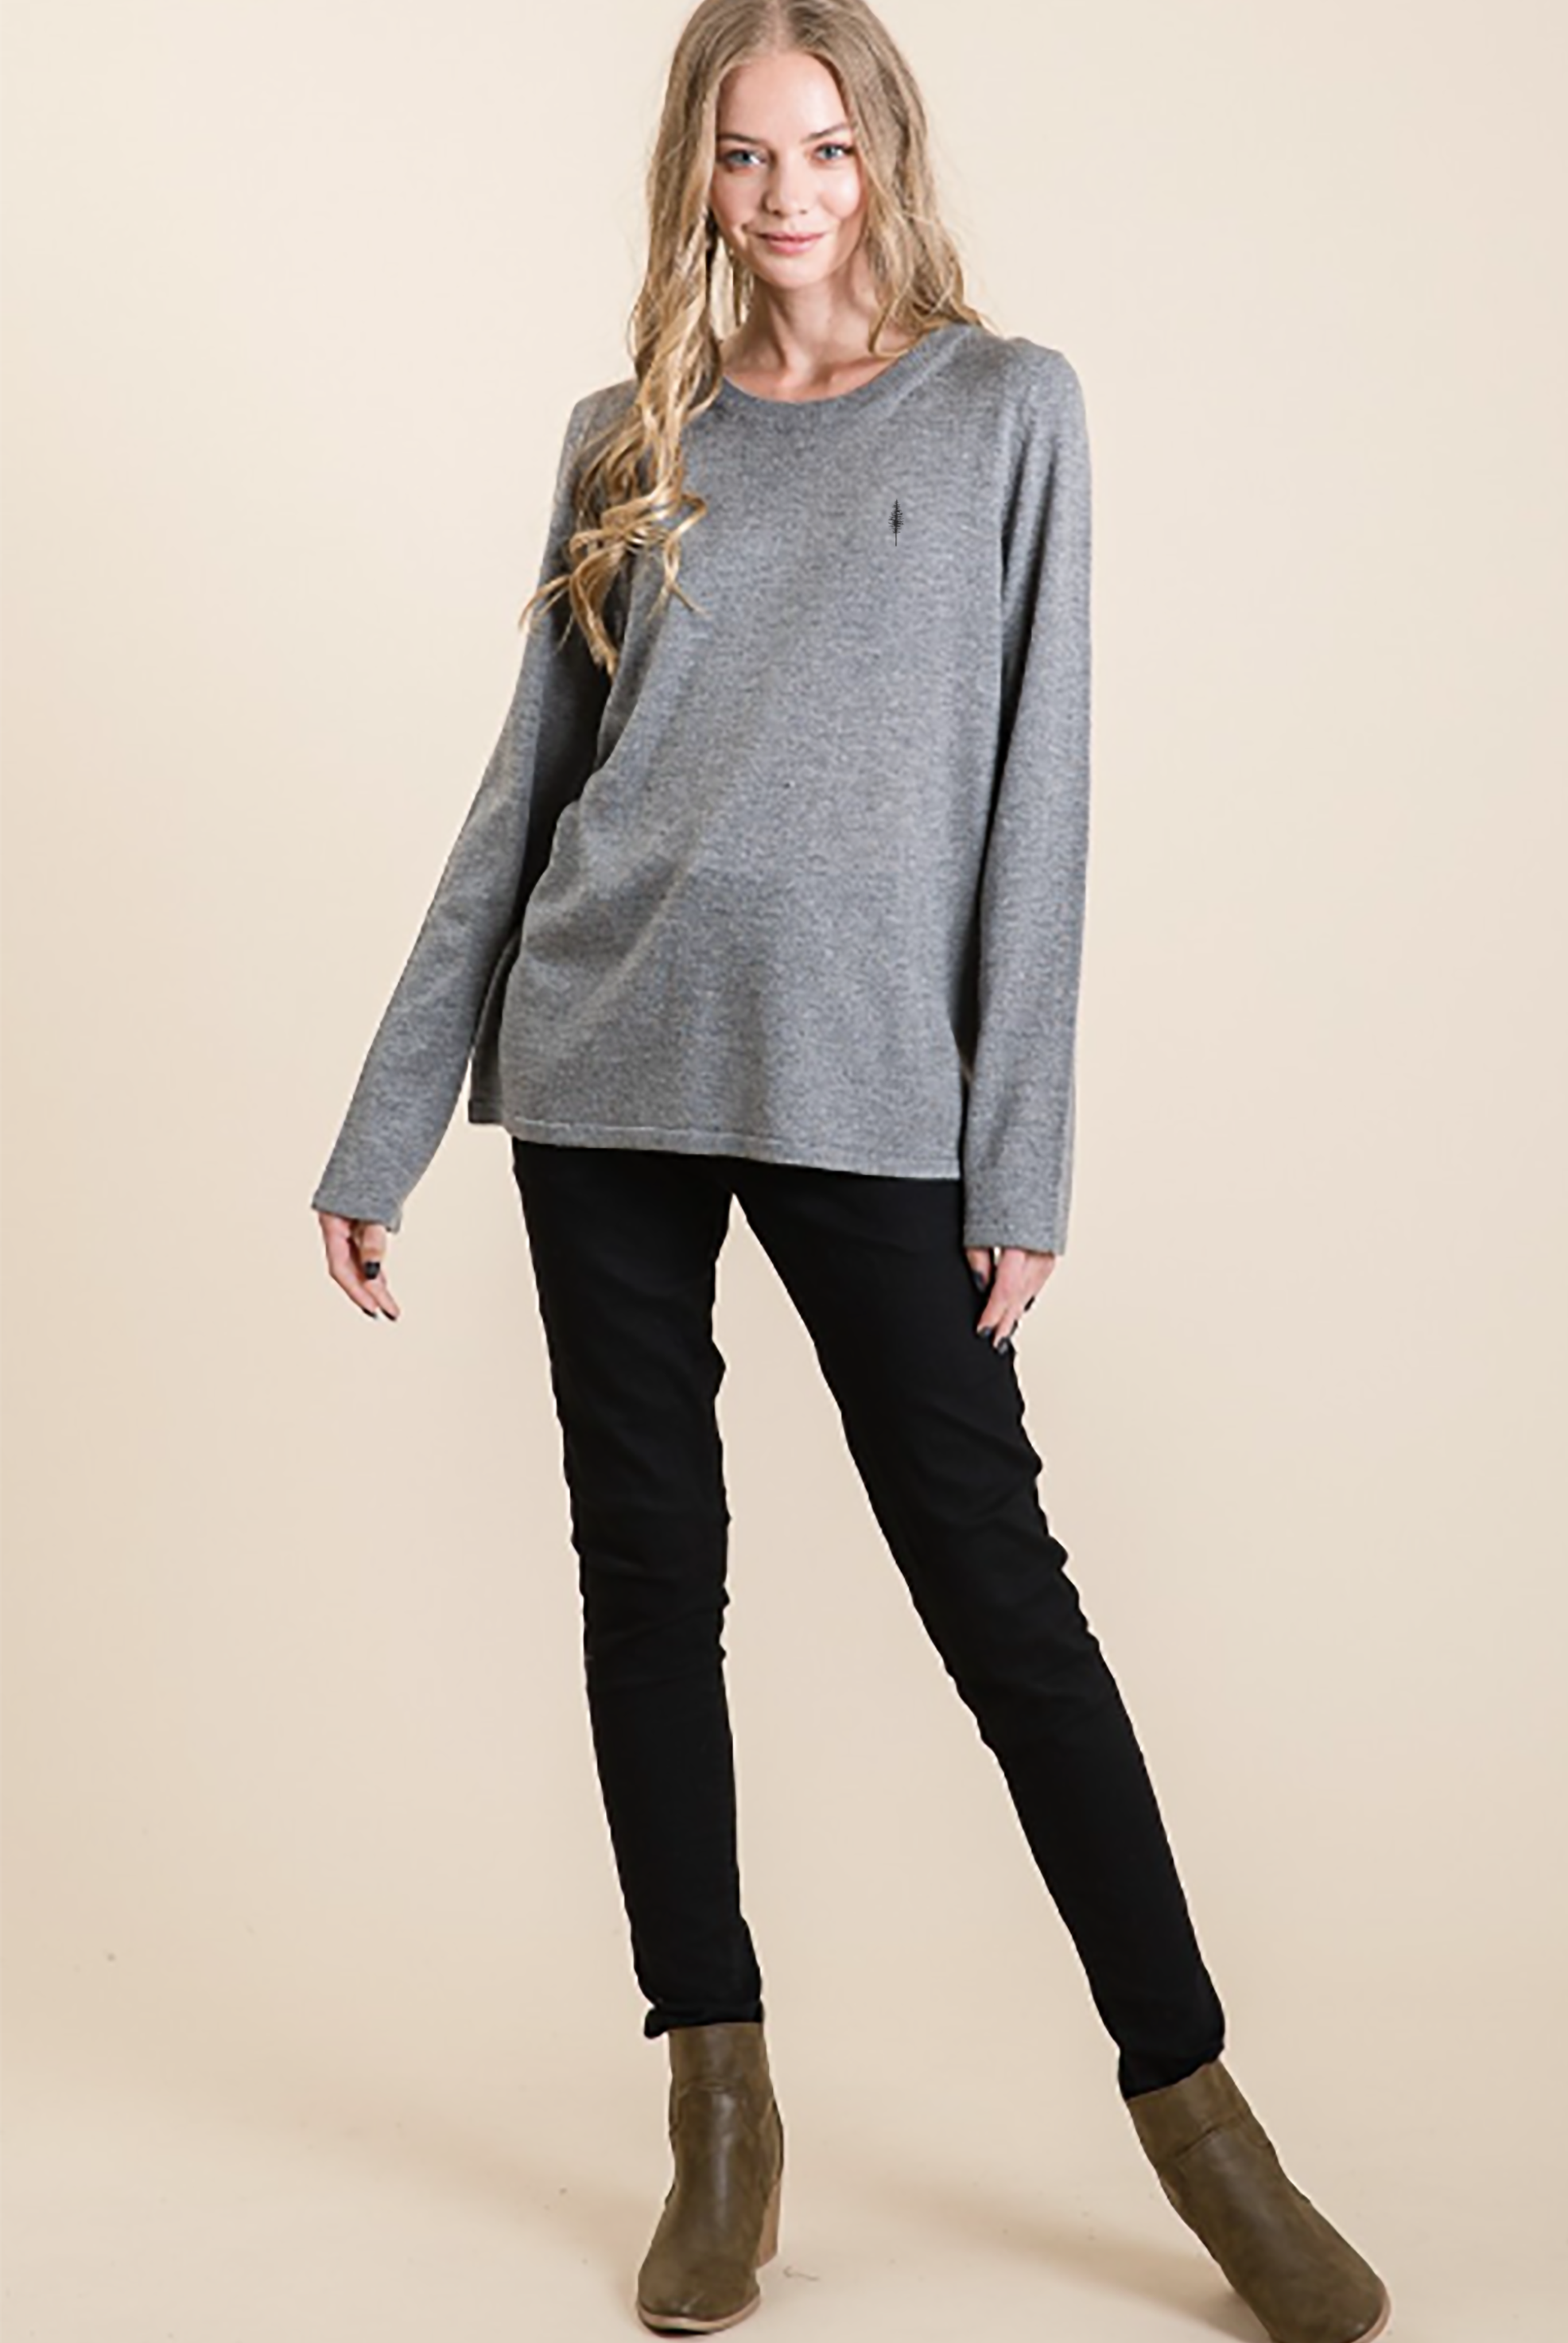 Women's round neck casual grey sweater